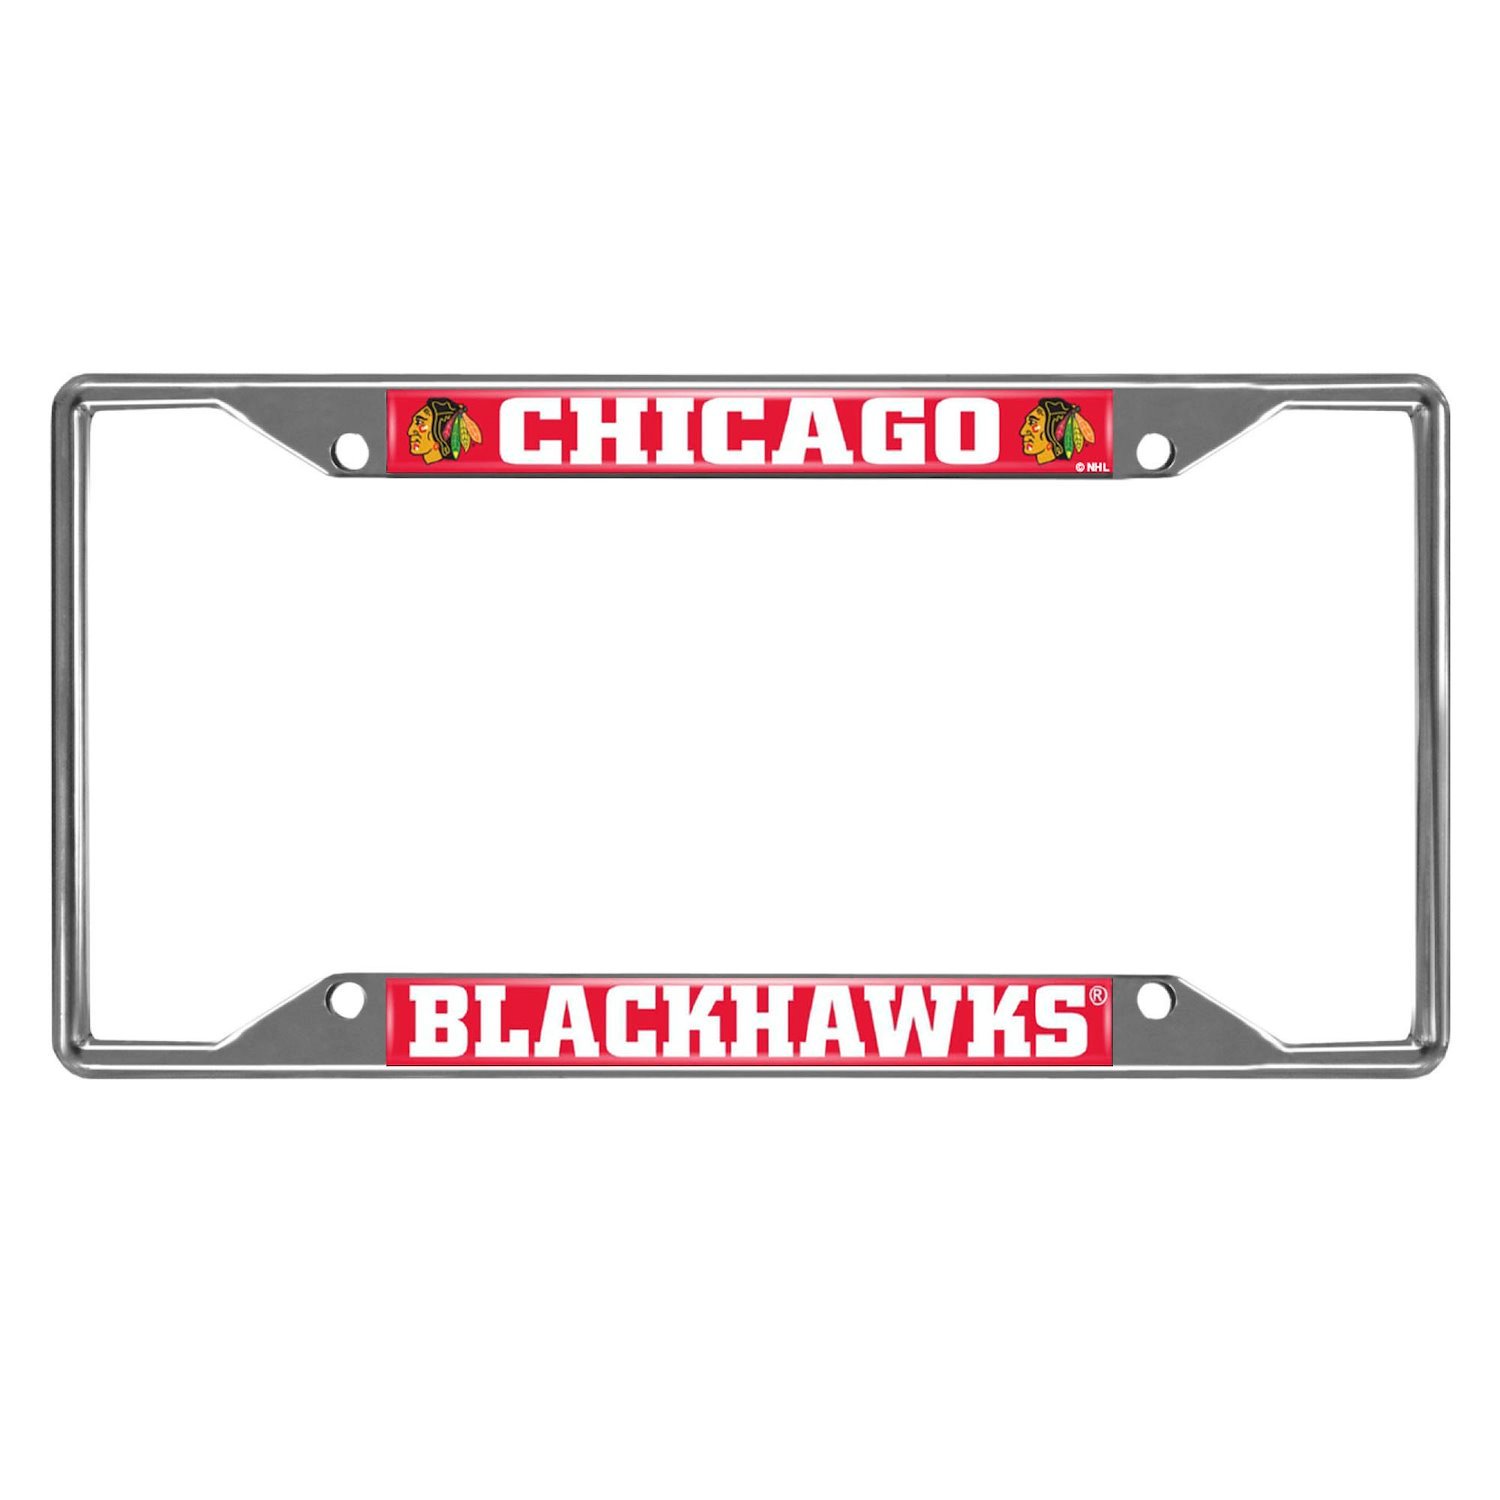 14790 Chrome-Metal License Plate Frame, 6.25 in. x 12.25 in., Chicago Blackhawks